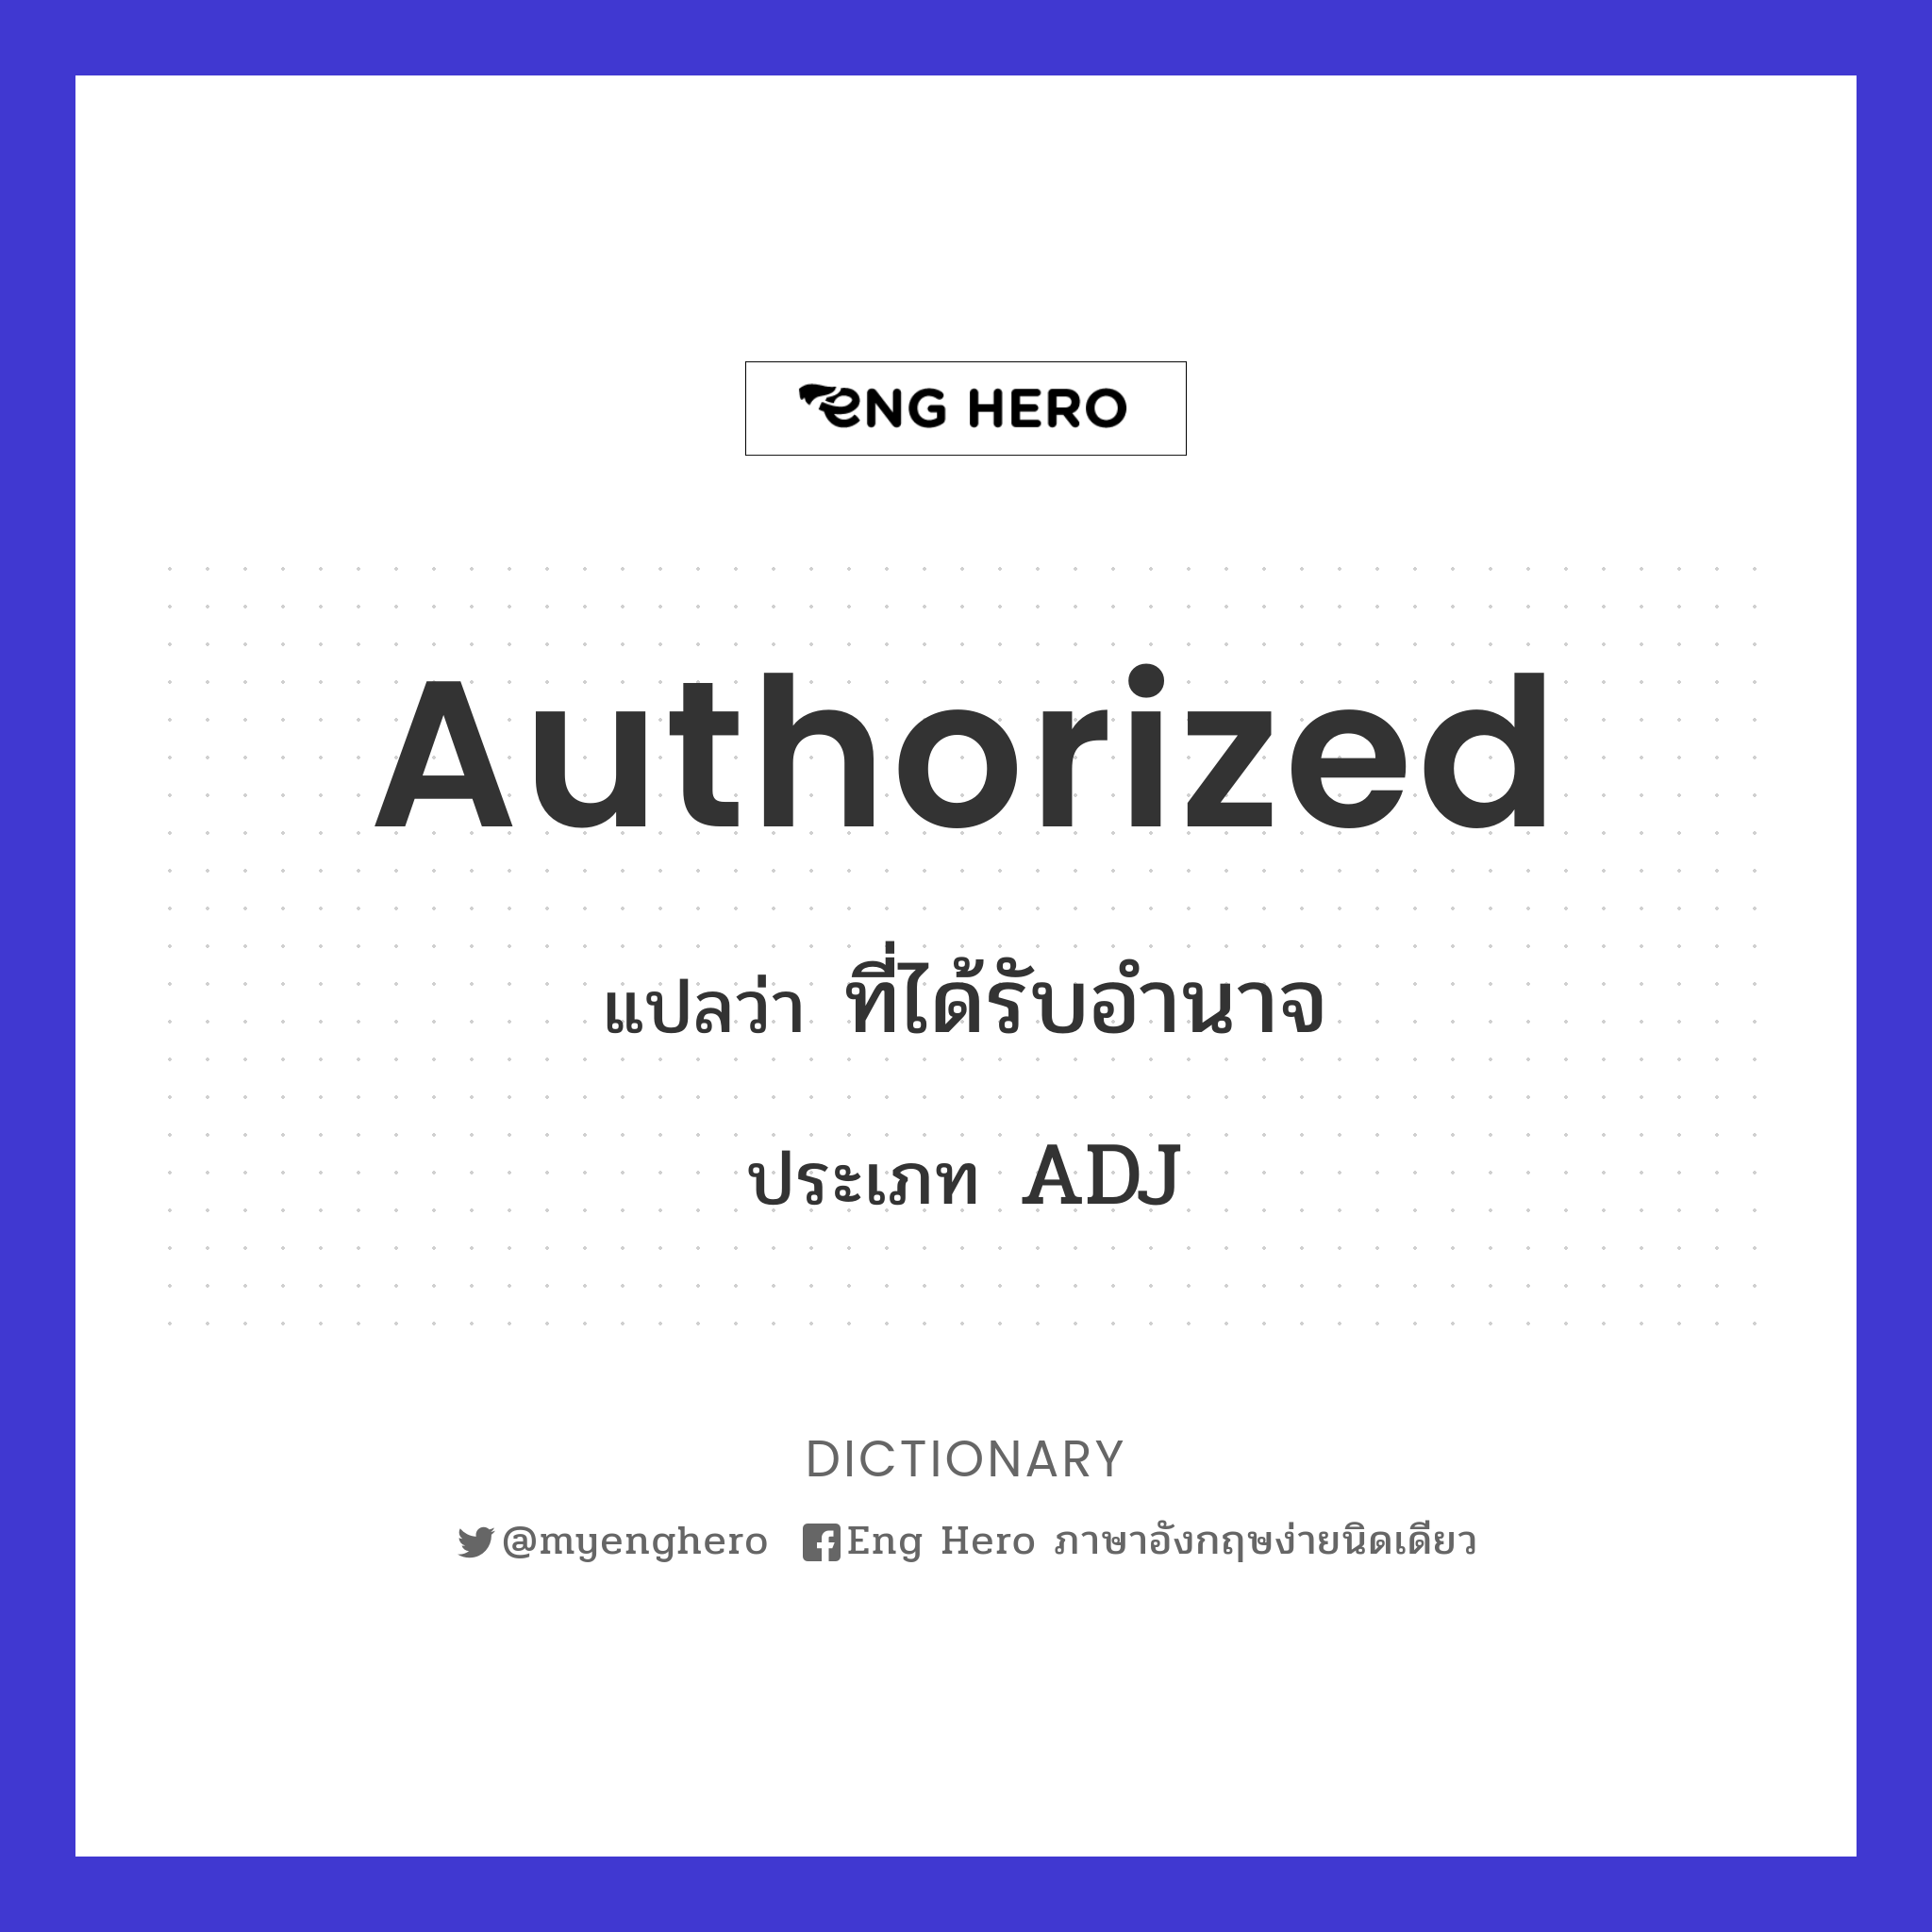 authorized